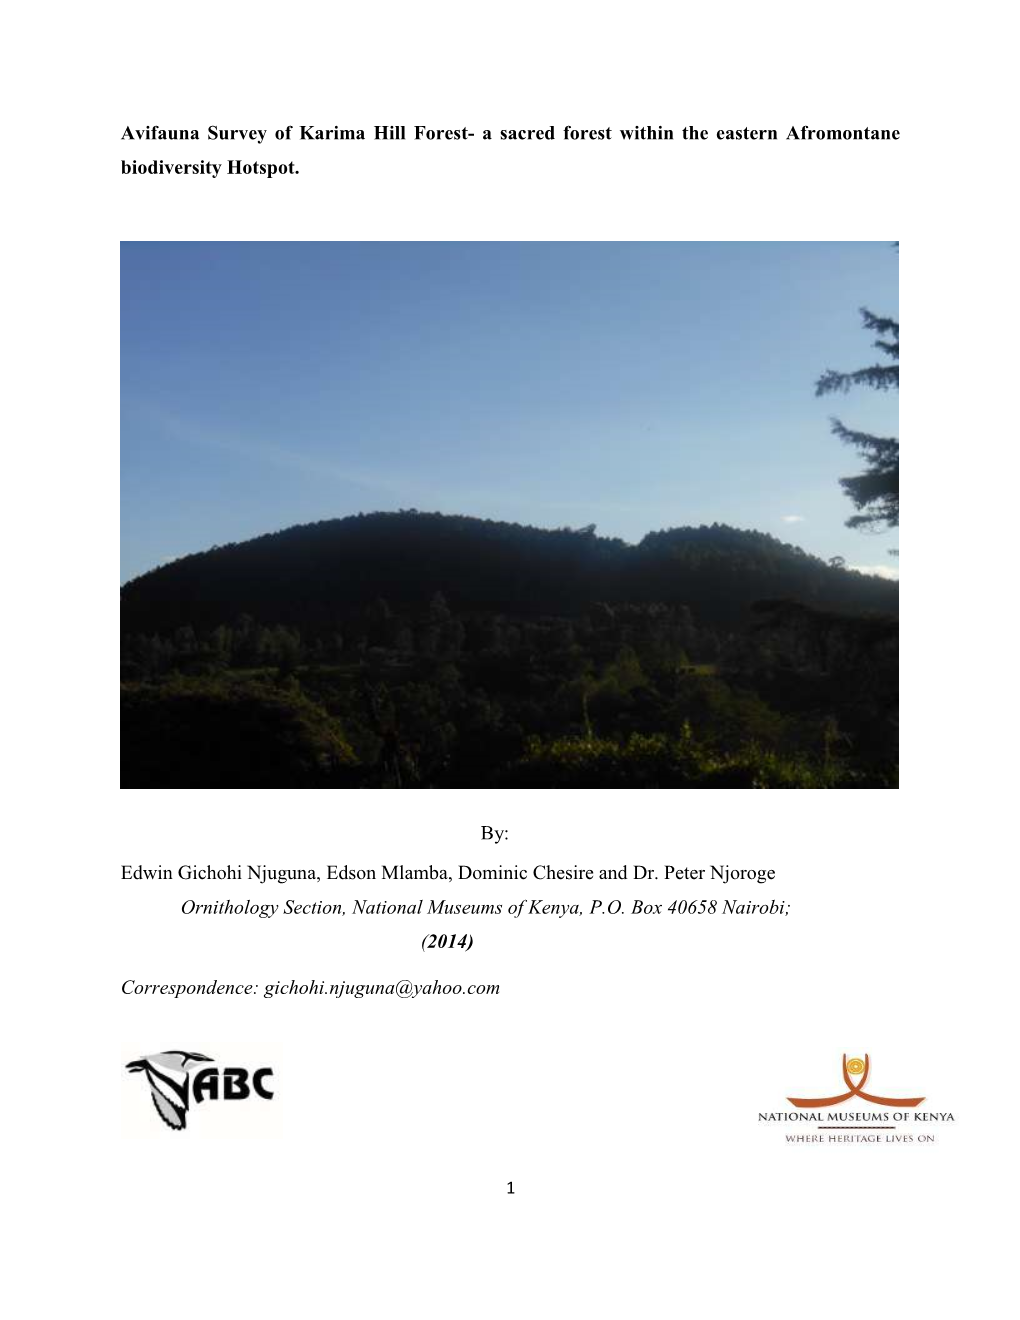 Avifaunal Survey of Karima Forest